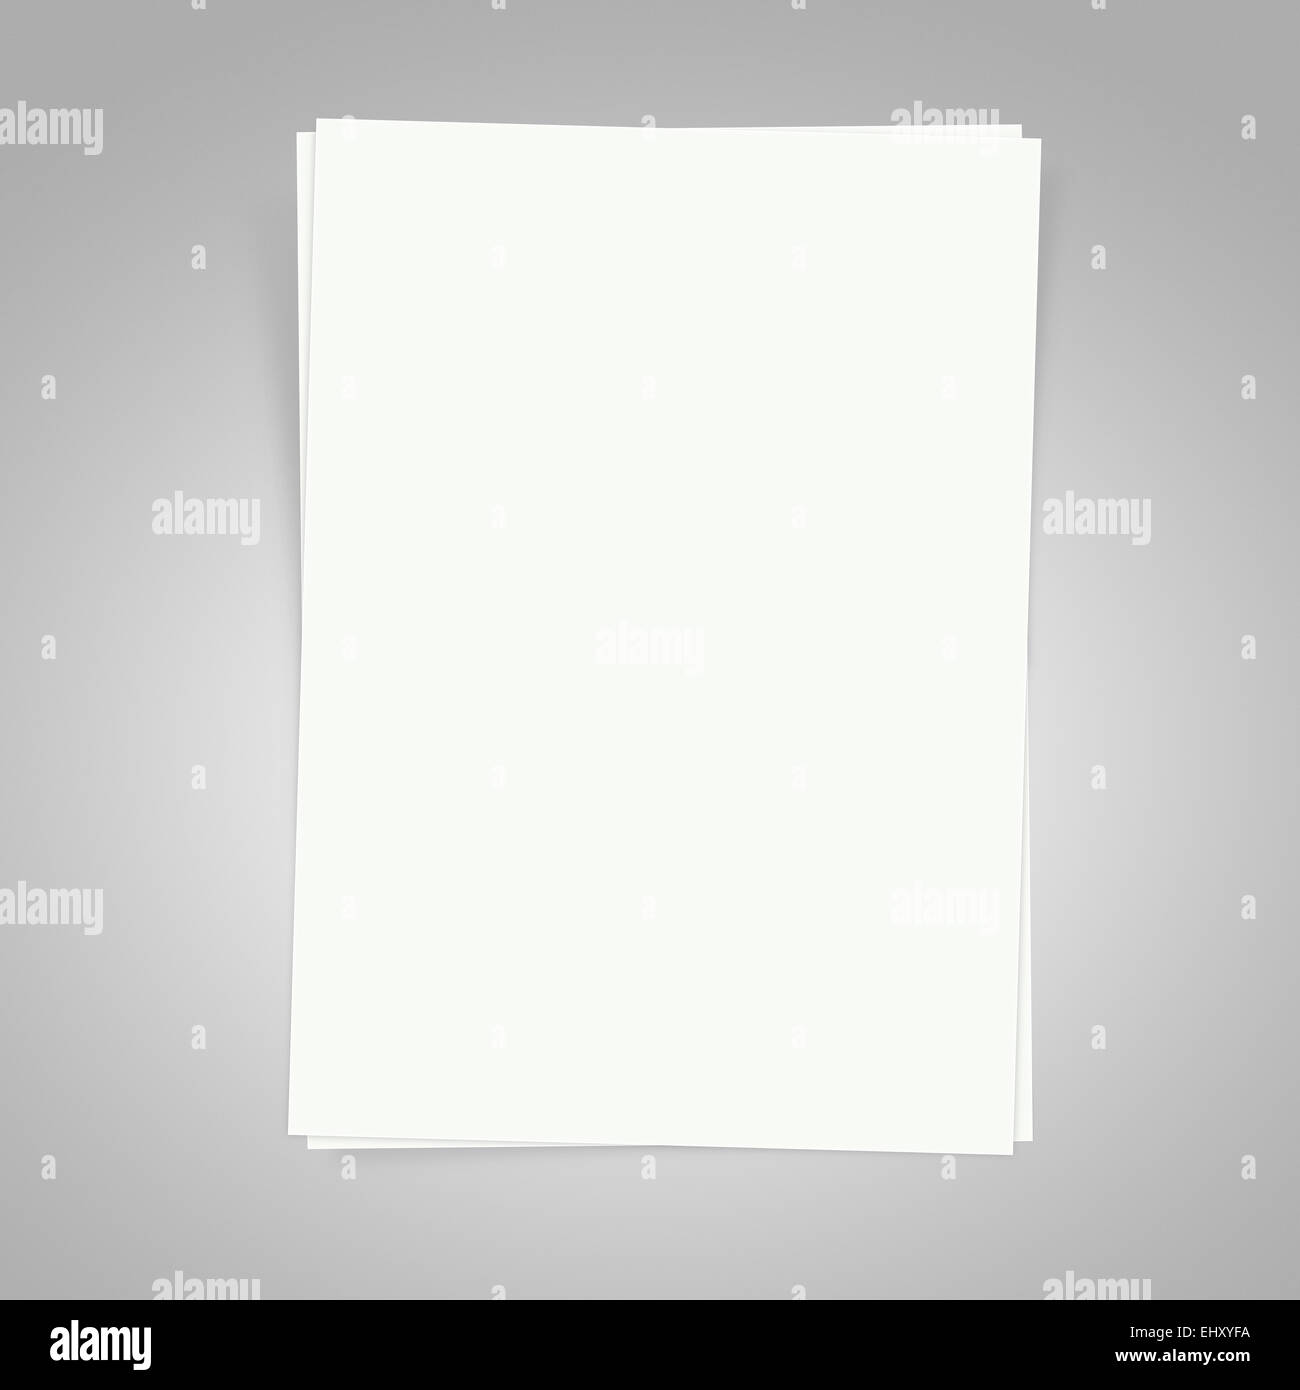 Papeles en blanco sobre un fondo gris con sombras Foto de stock